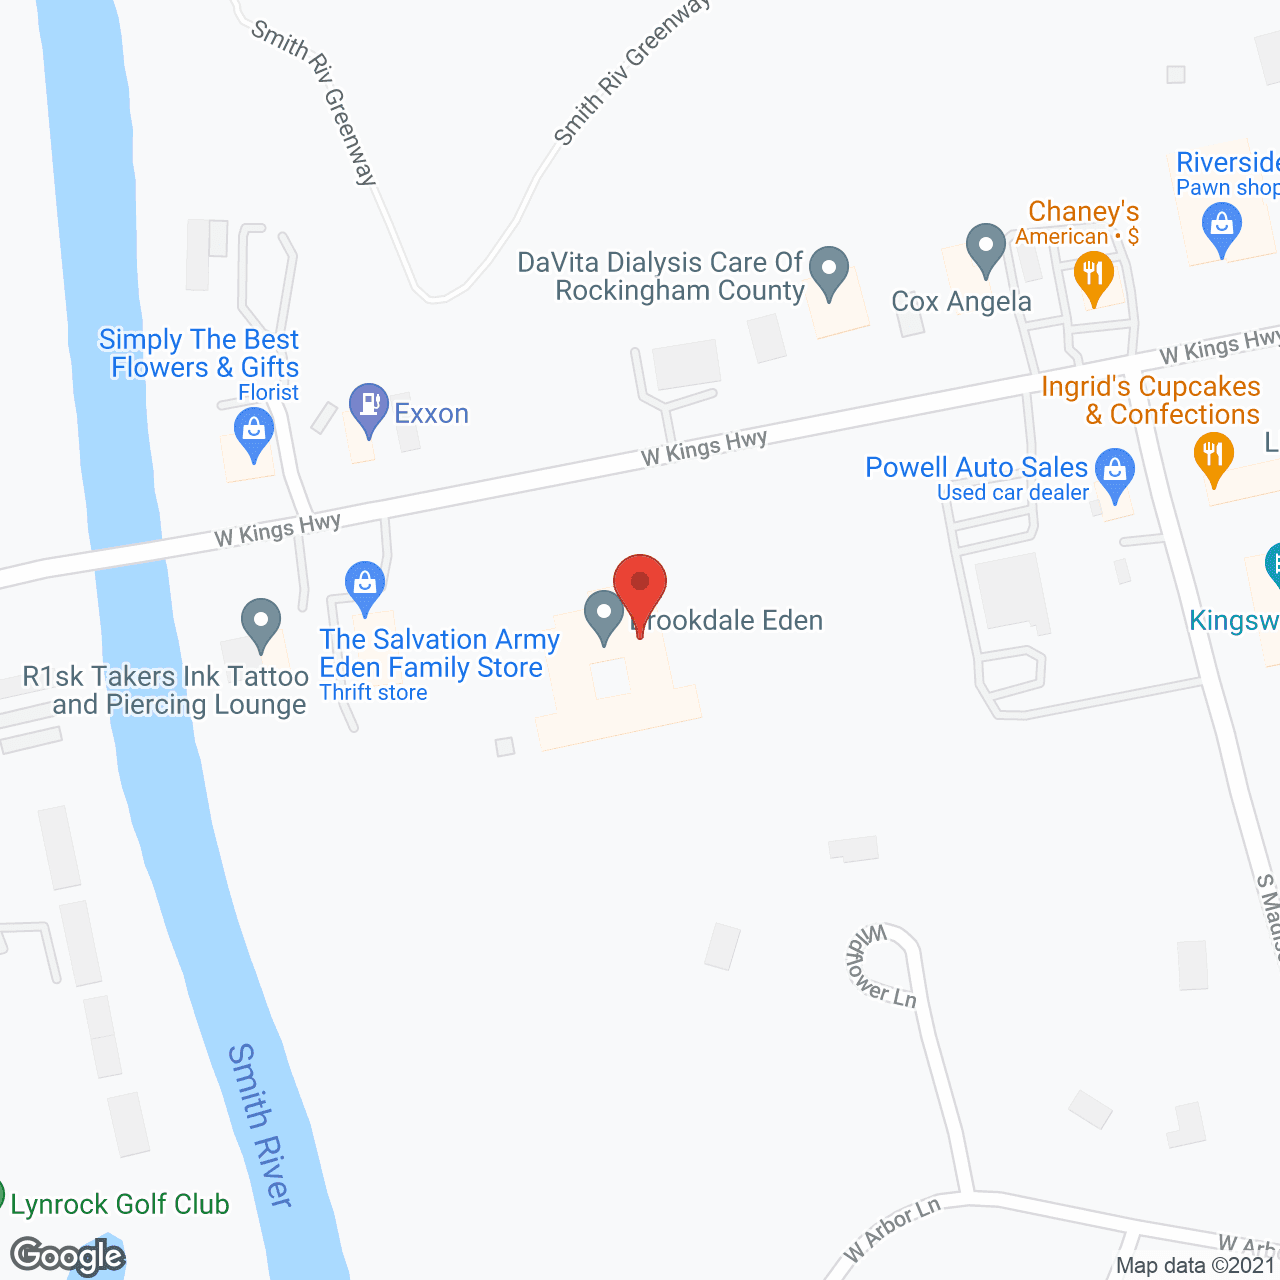 Brookdale Eden in google map